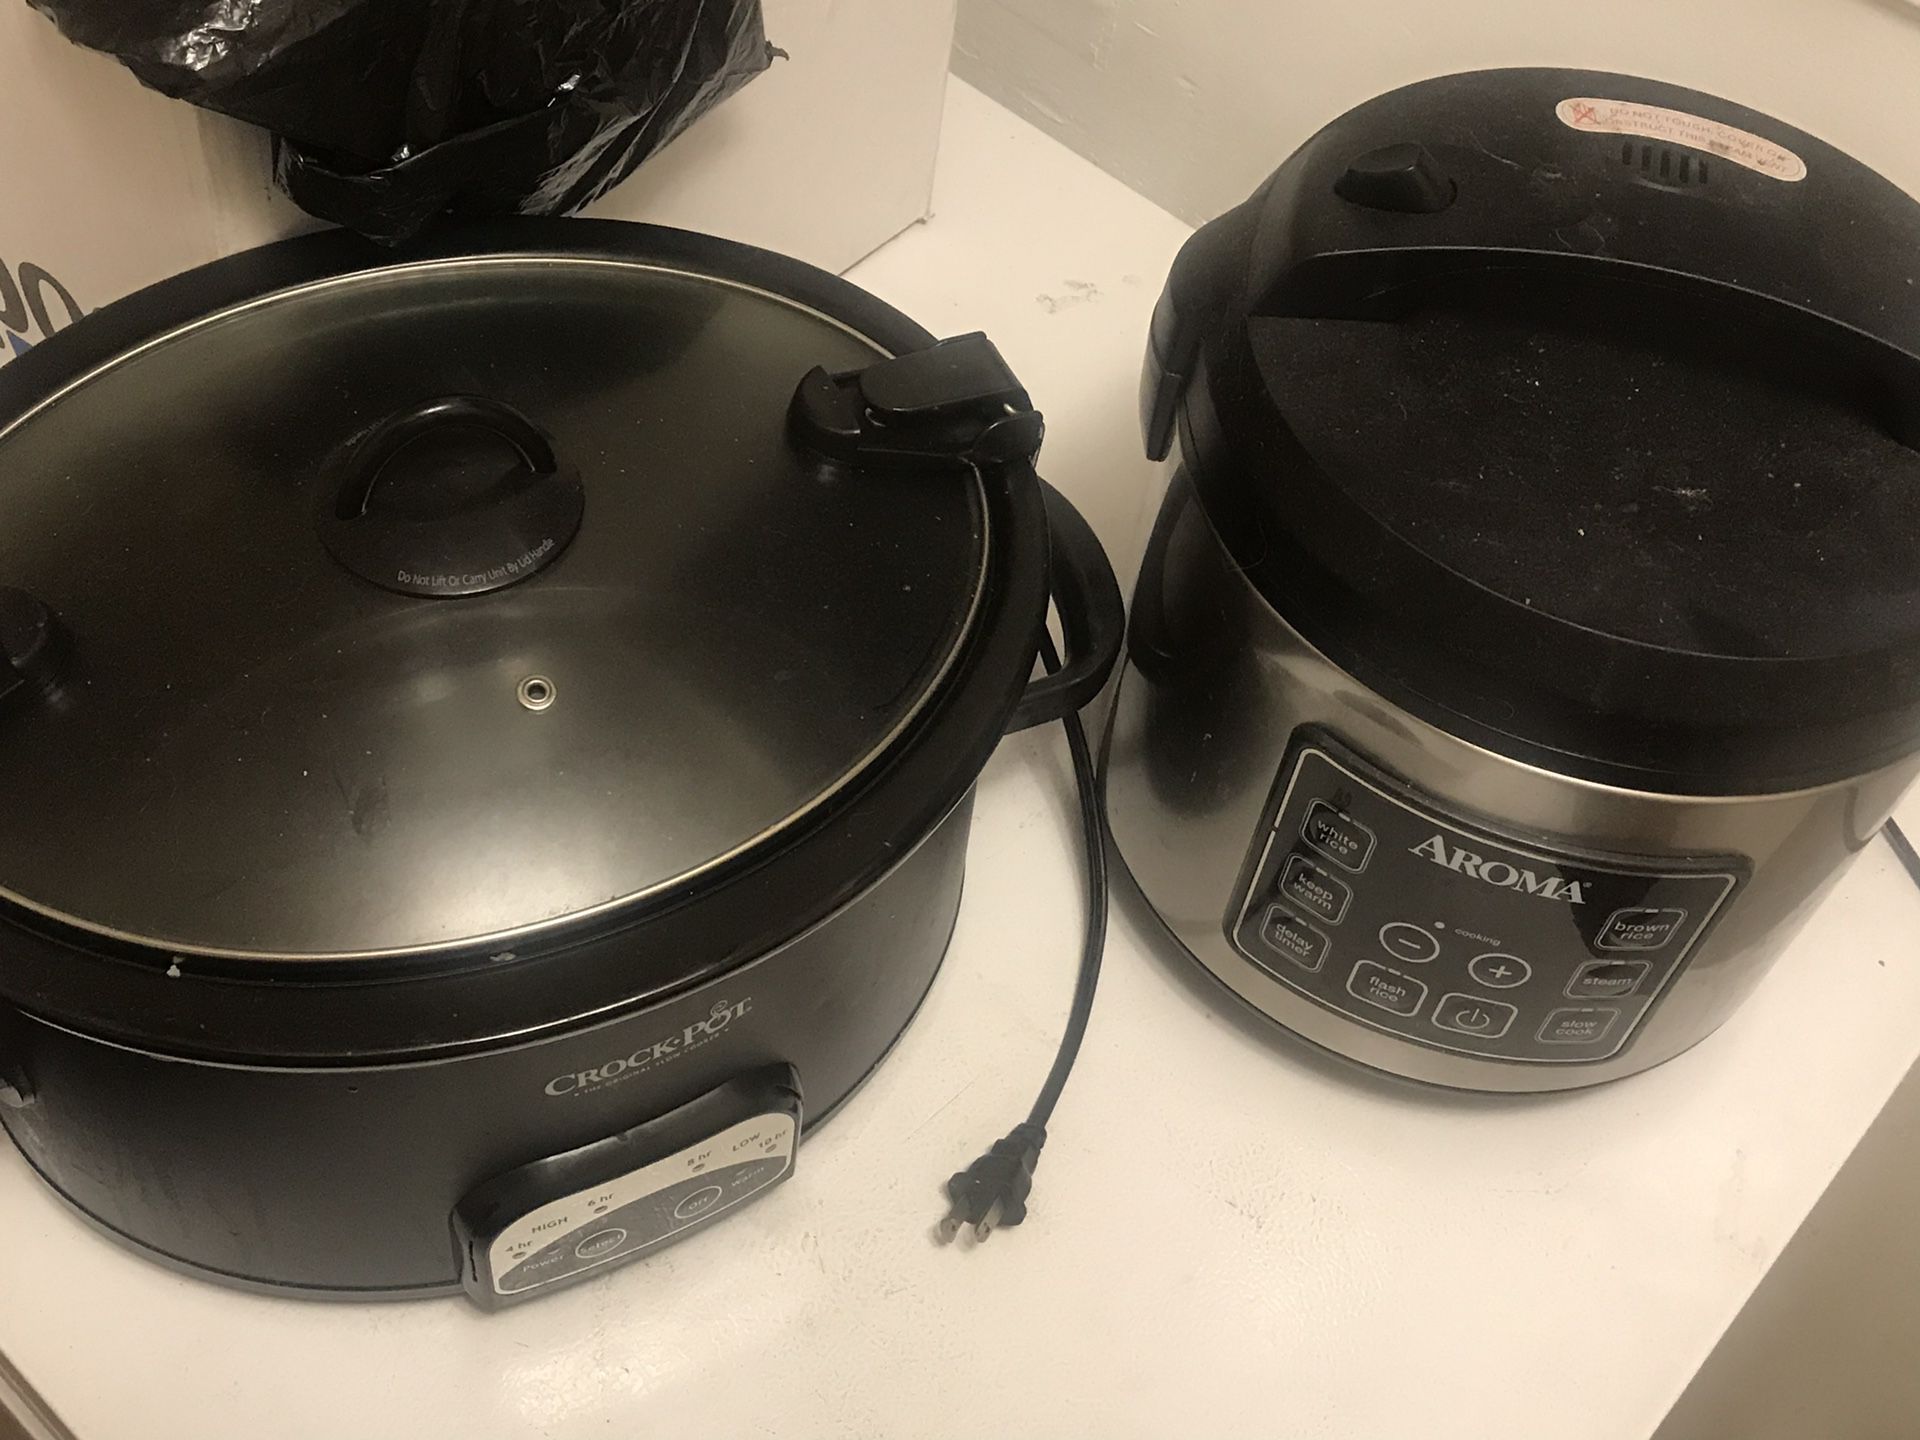 Crock pot and rice cooker / steamer